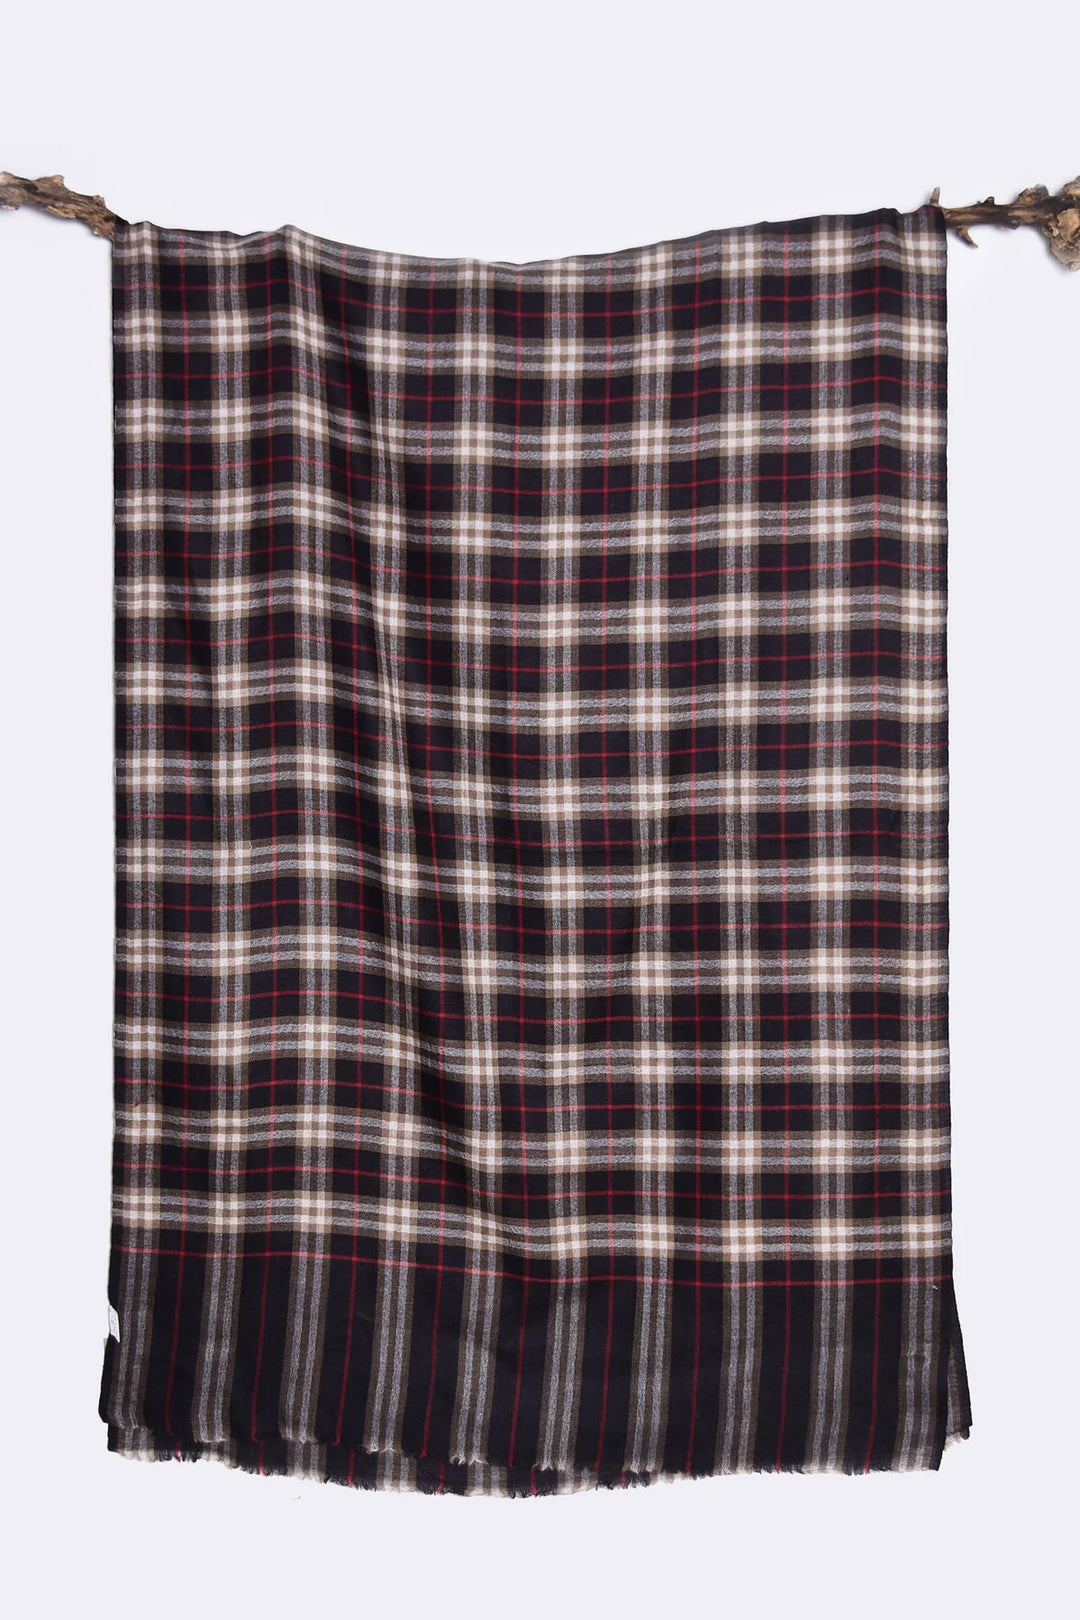 Colorful Cashmere Stole for Festive Style | Rame Handwoven Soft Cashmere Stole - Multi Color